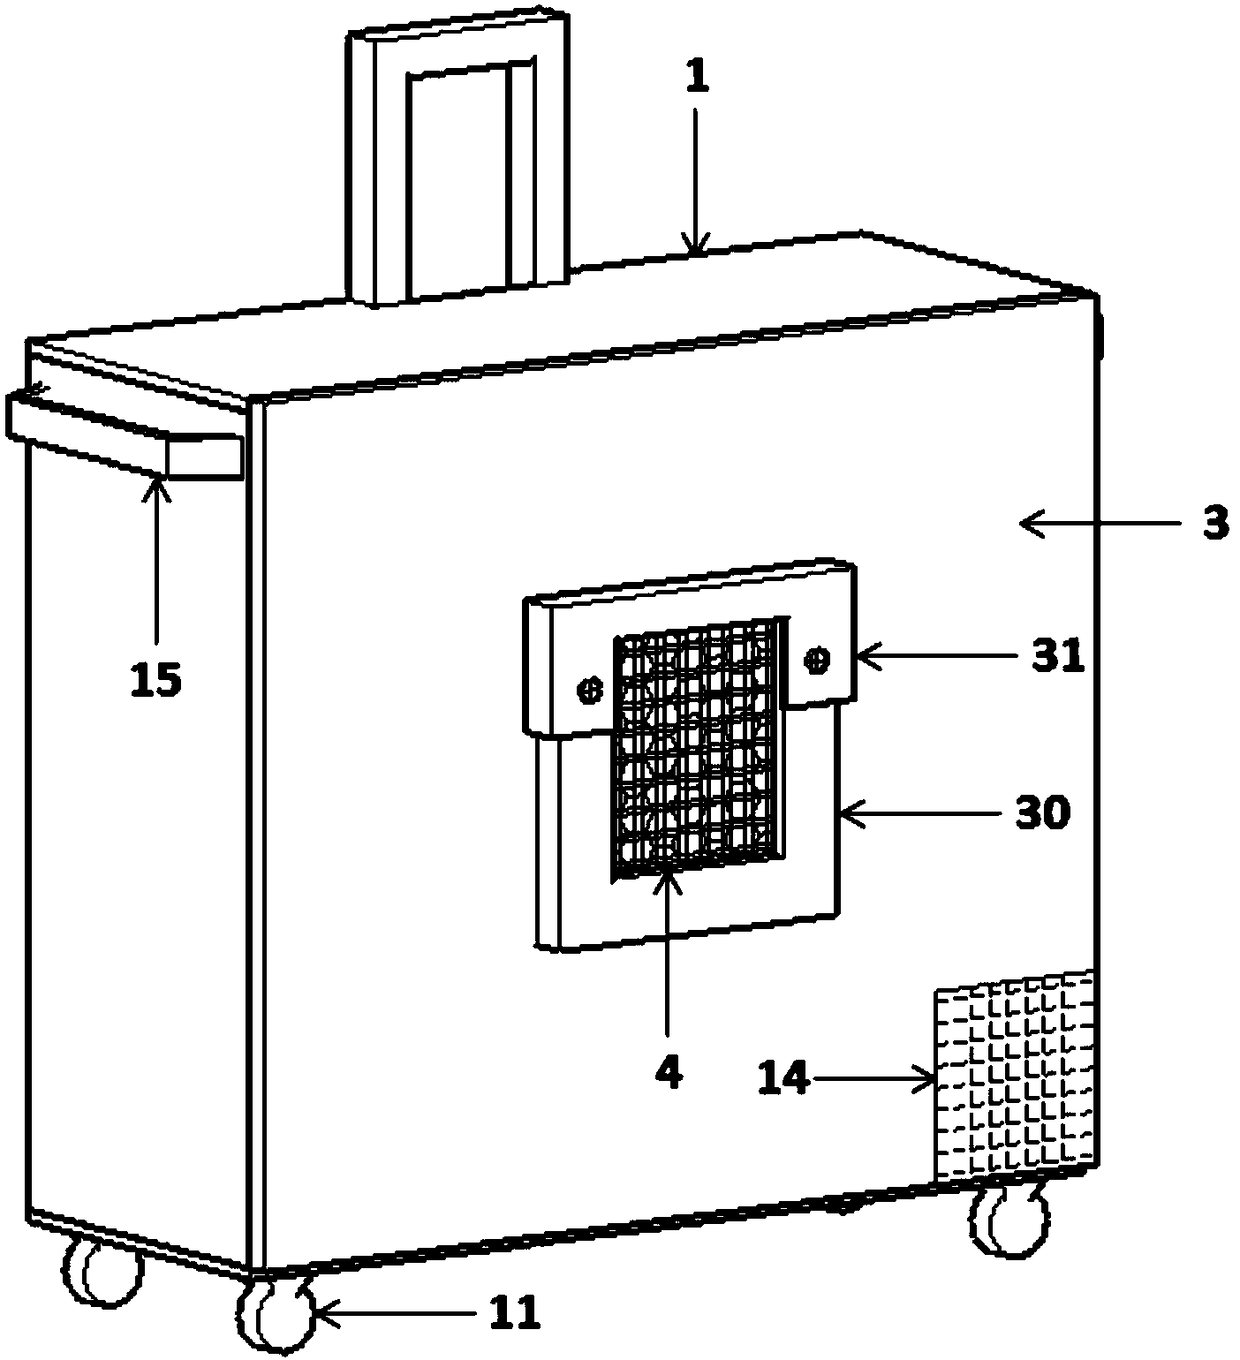 Computer mainframe case